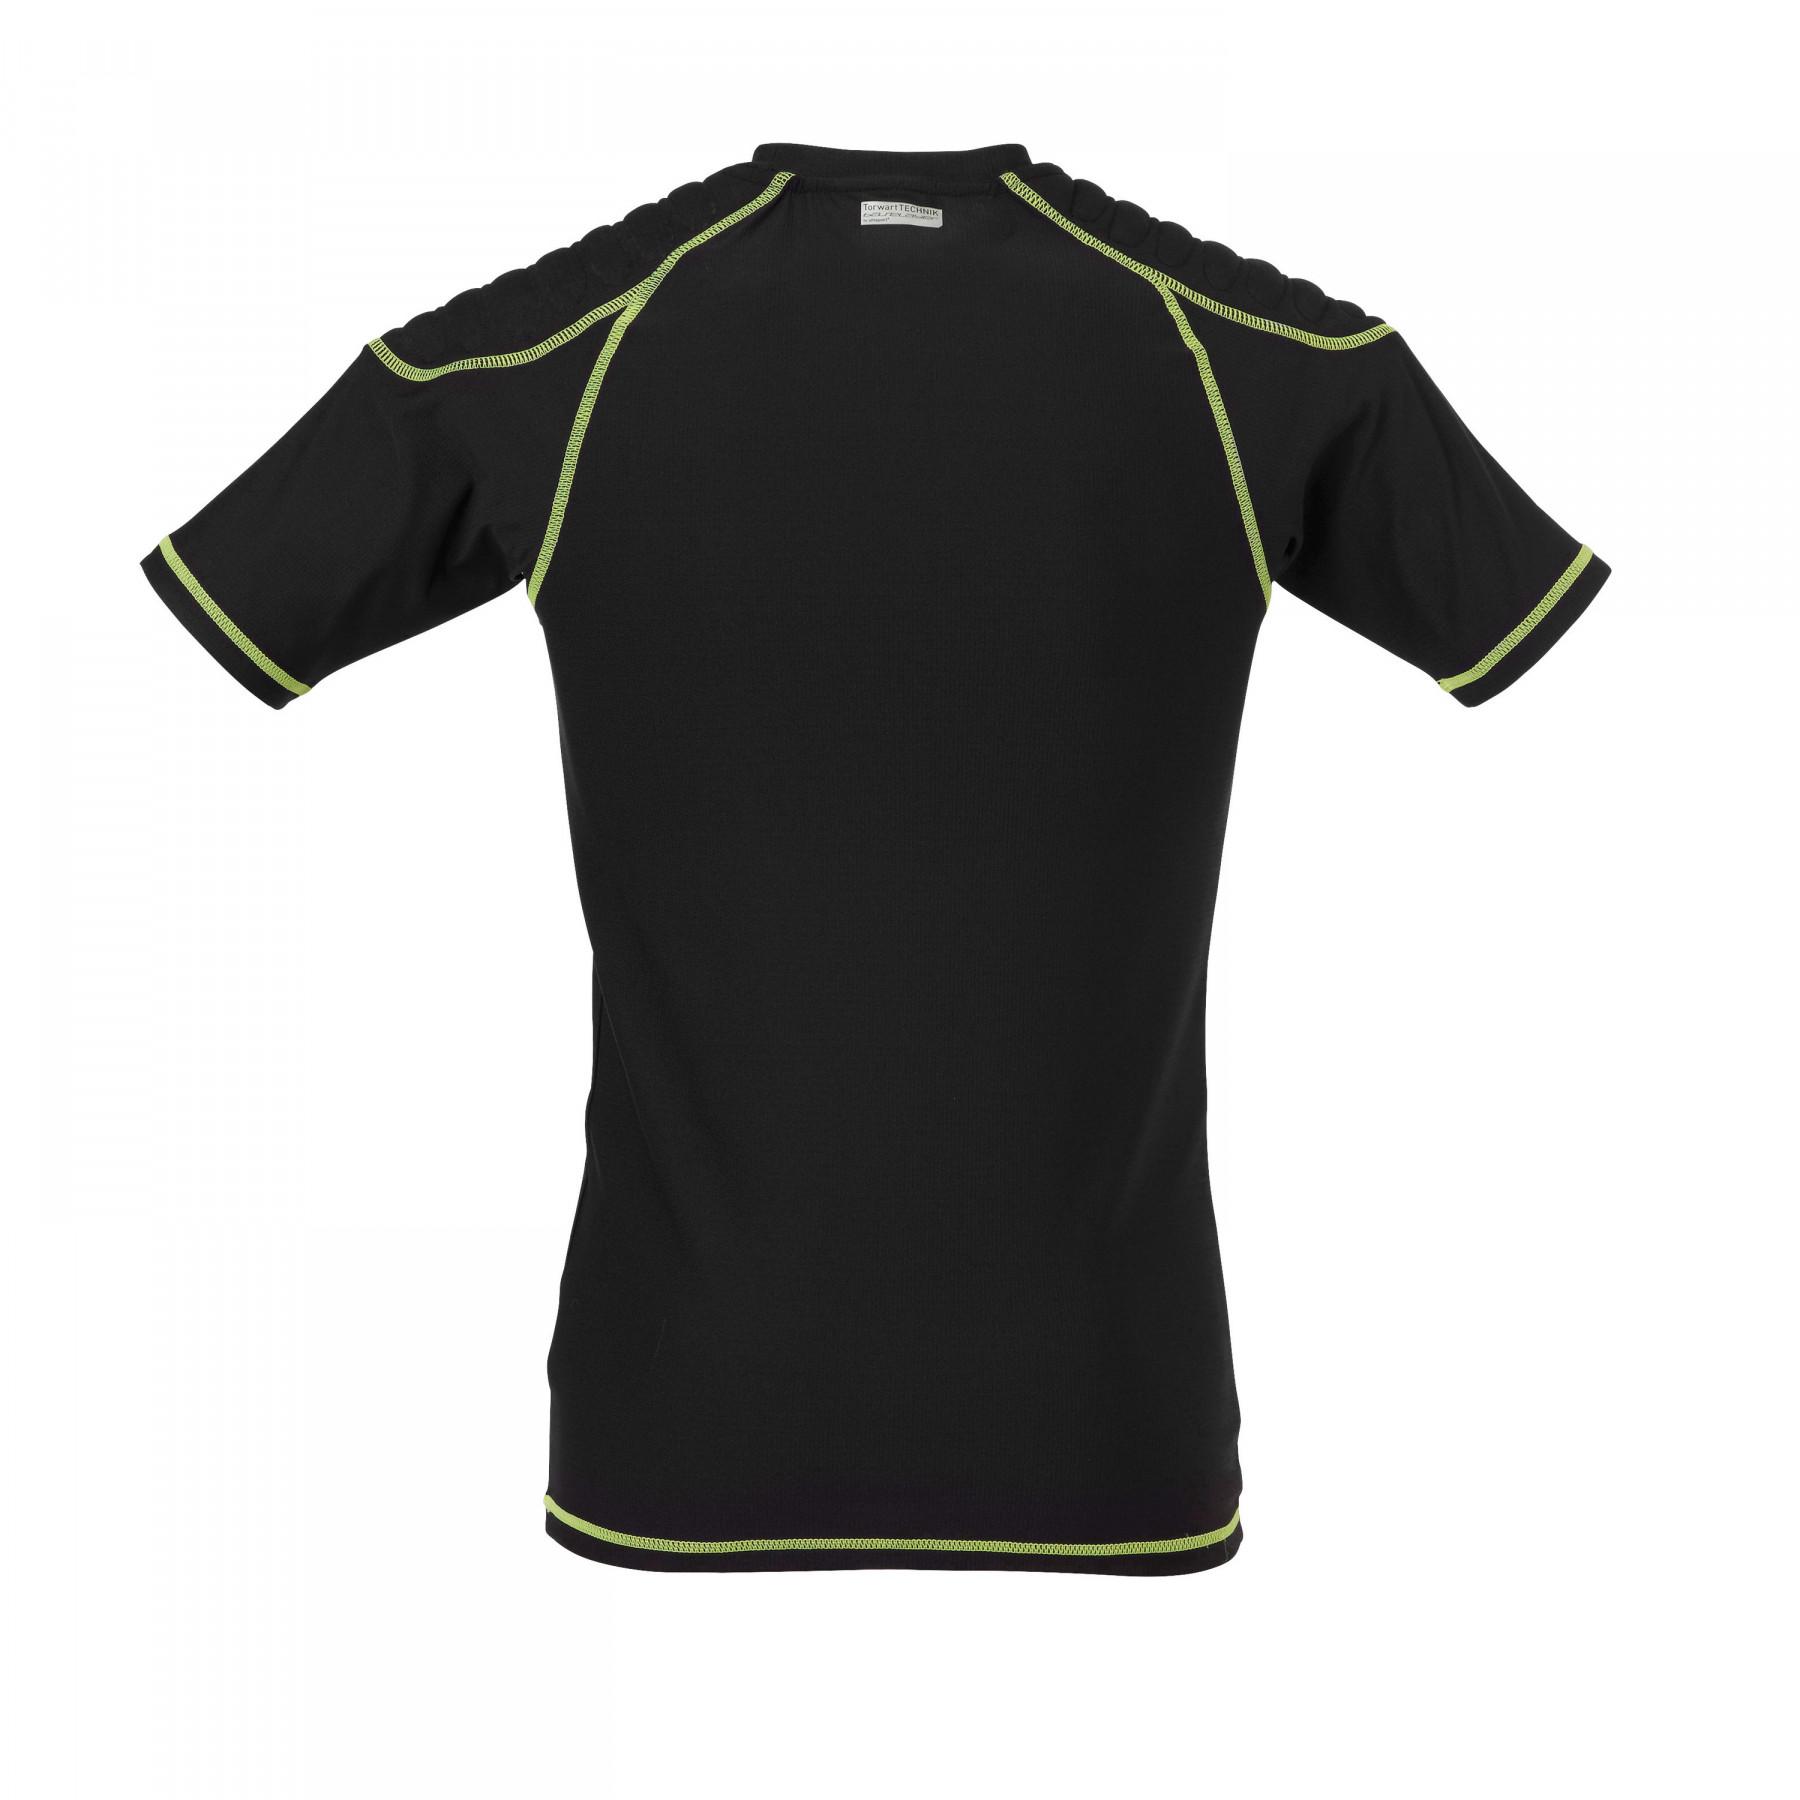 Camiseta interior de protección Uhlsport manches courtes noir/jaune fluo